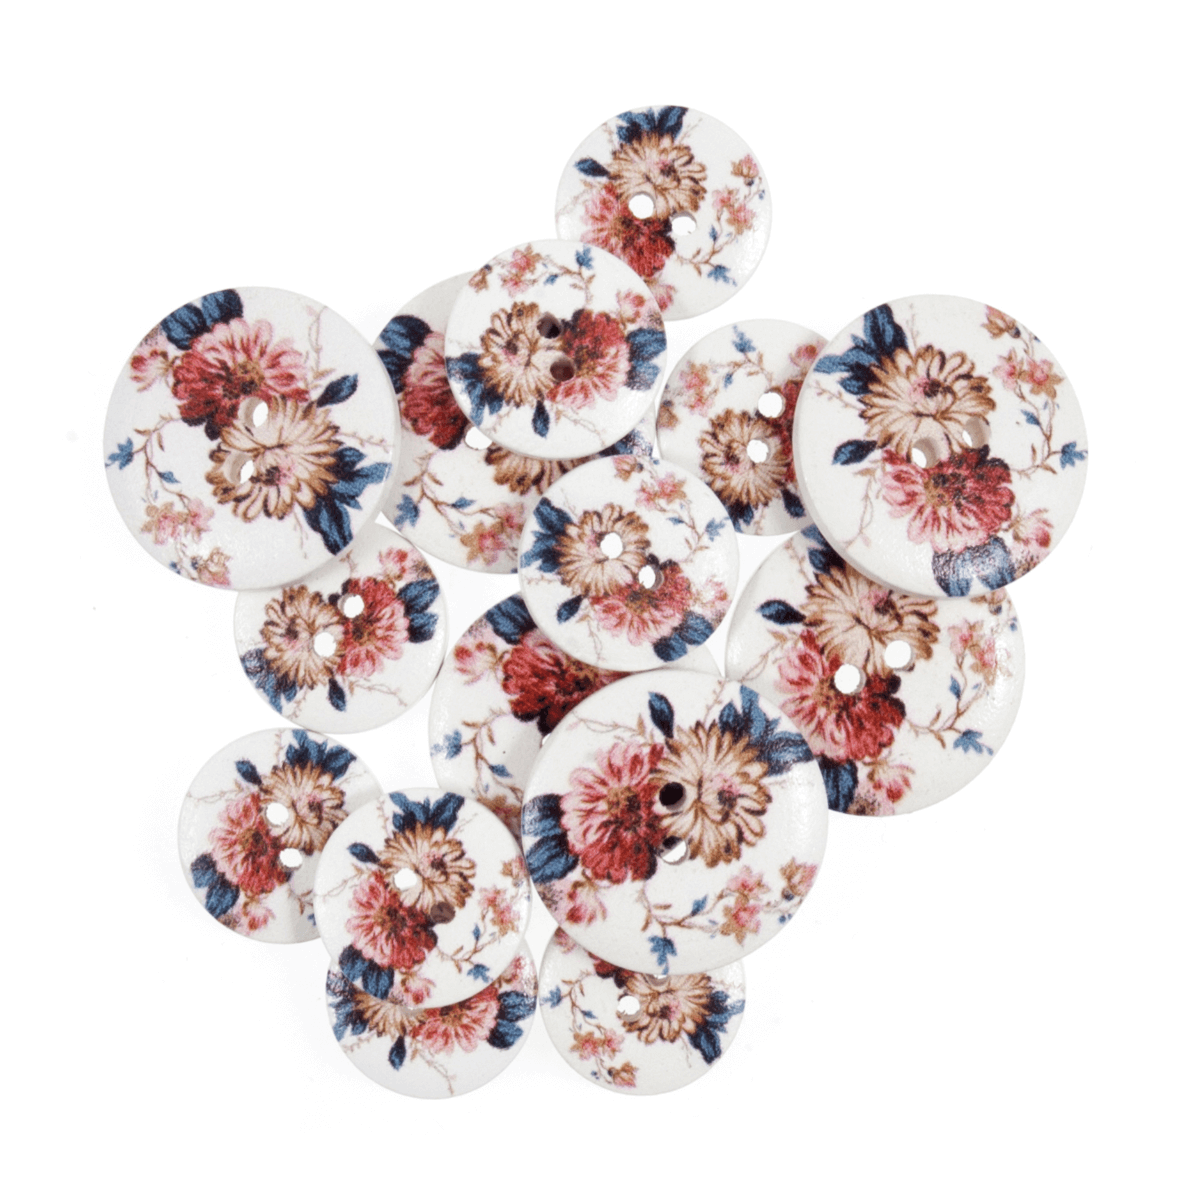 15 x Assorted Rose Flower Bloom Wooden Craft Buttons 18mm - 25mm 